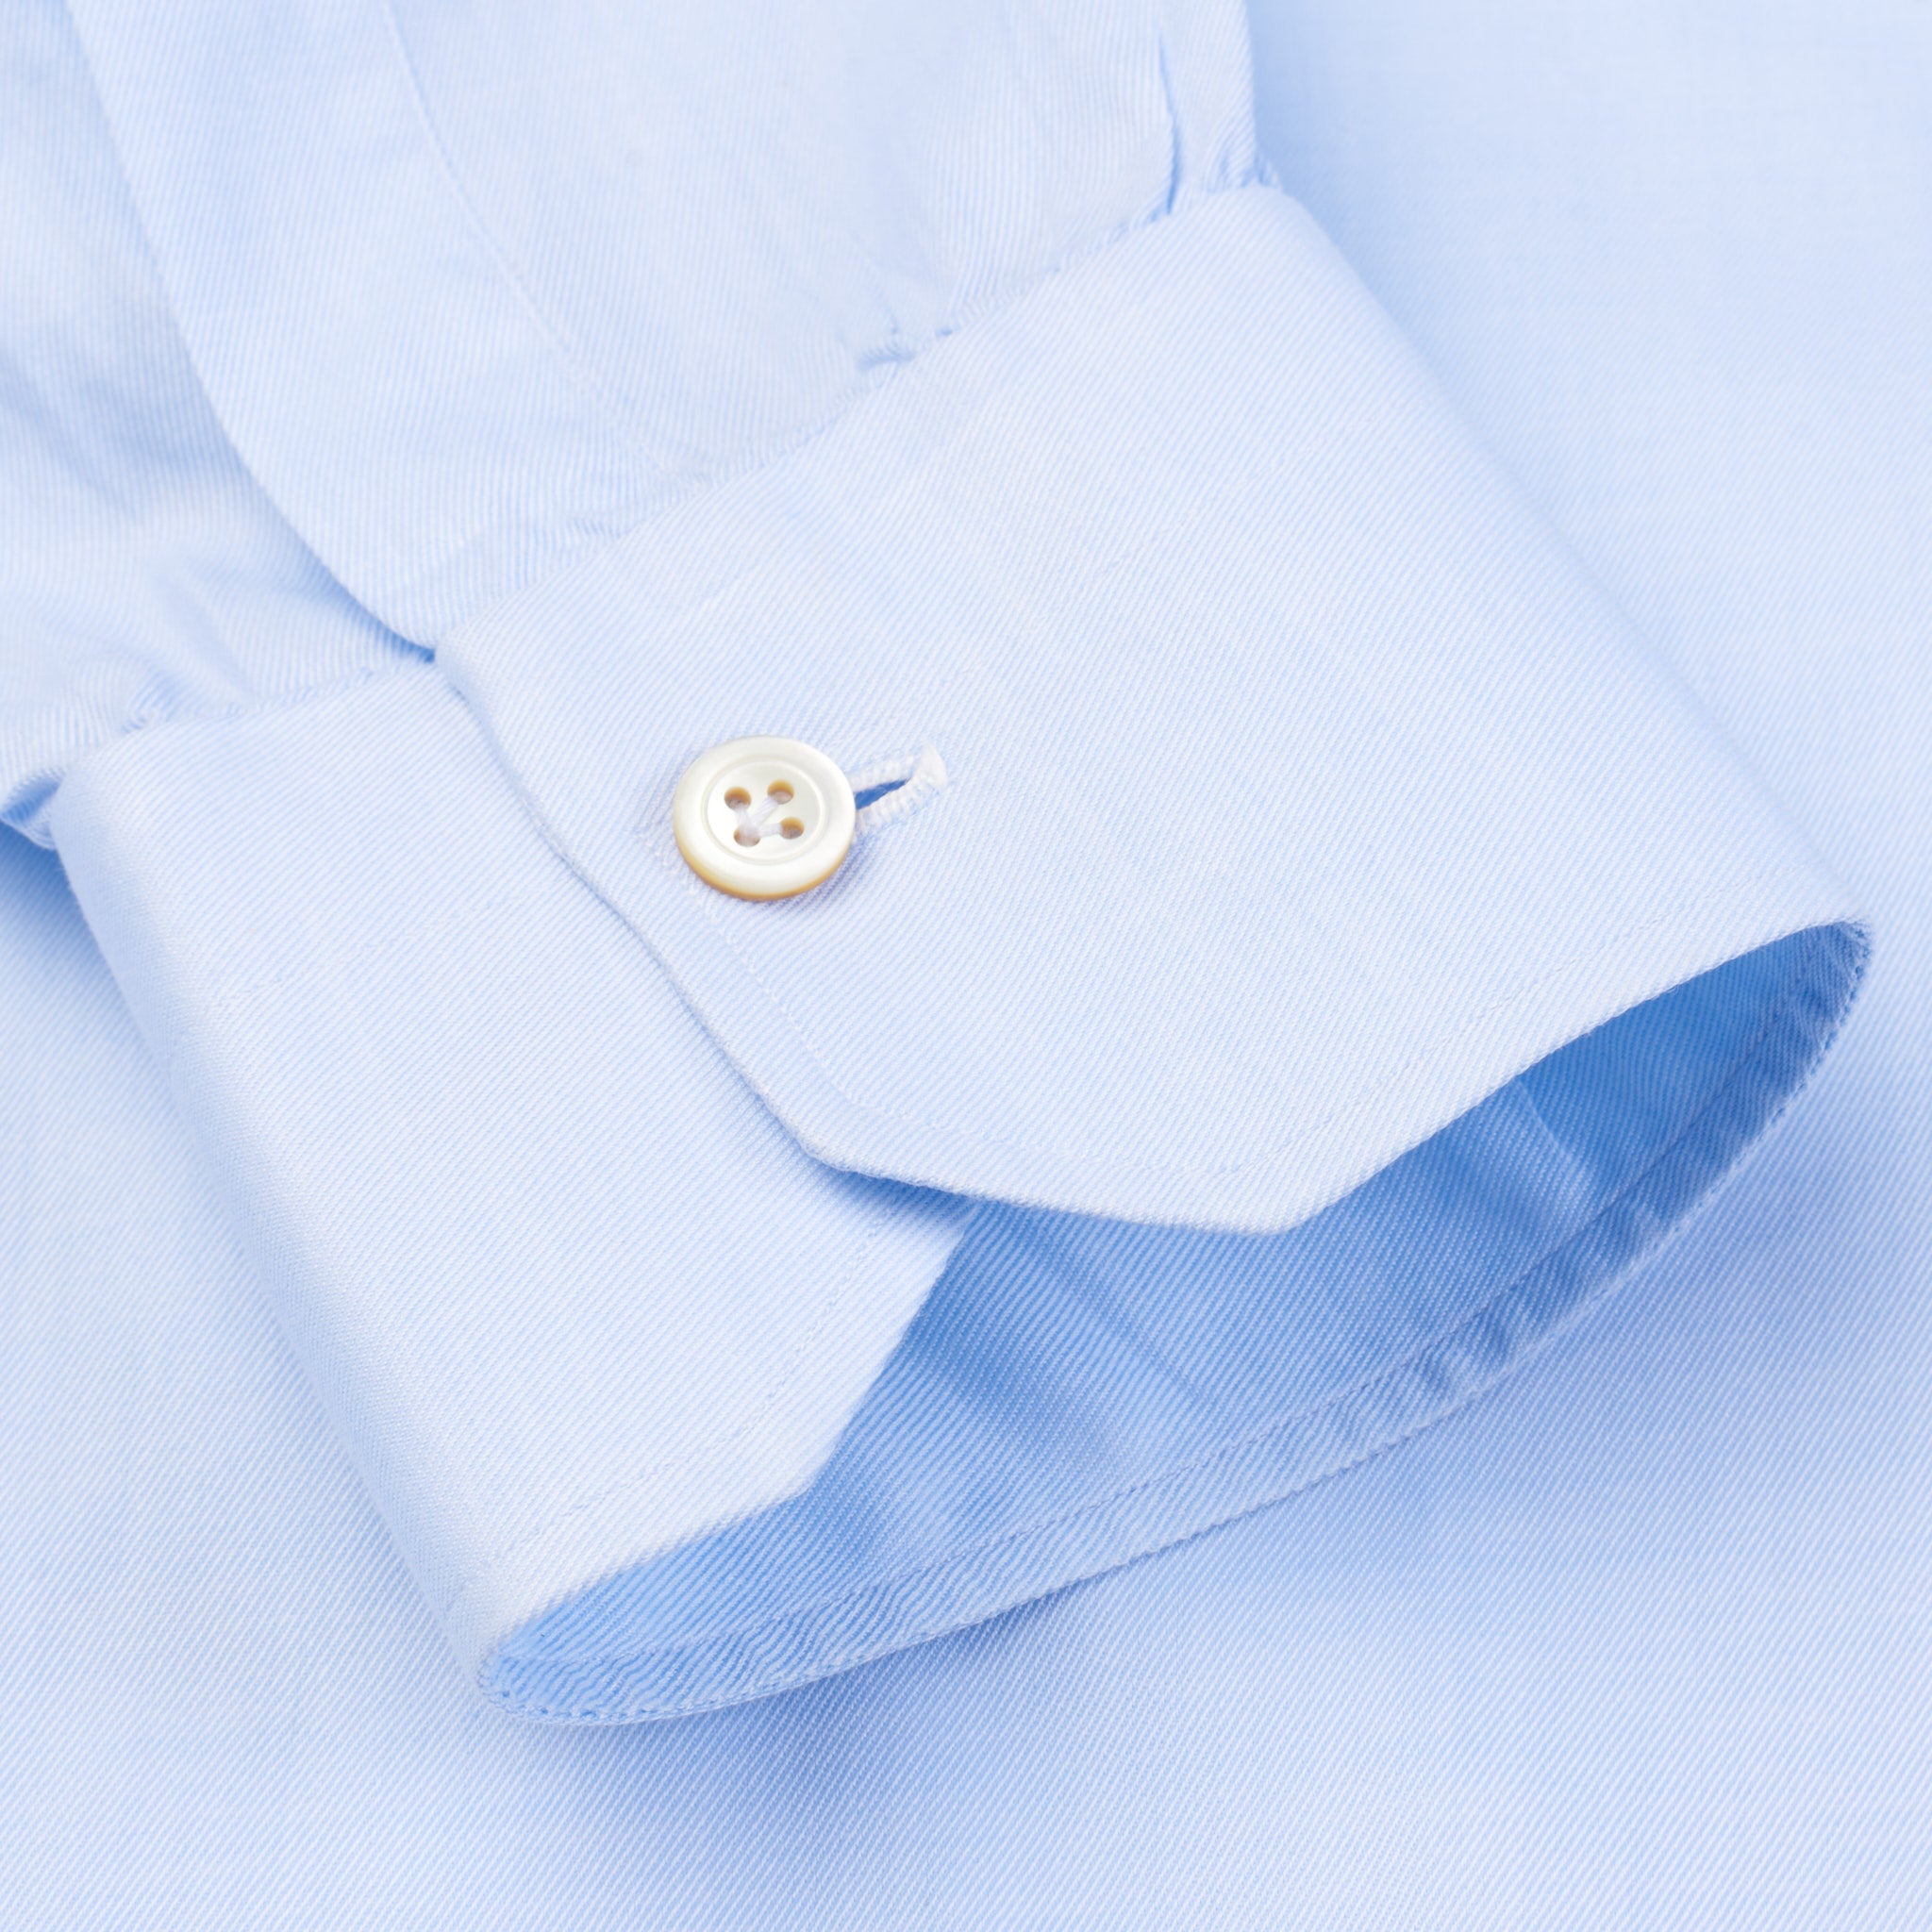 KITON Napoli Handmade Bespoke Blue Twill Cotton Dress Shirt EU 40 US 15.75 KITON